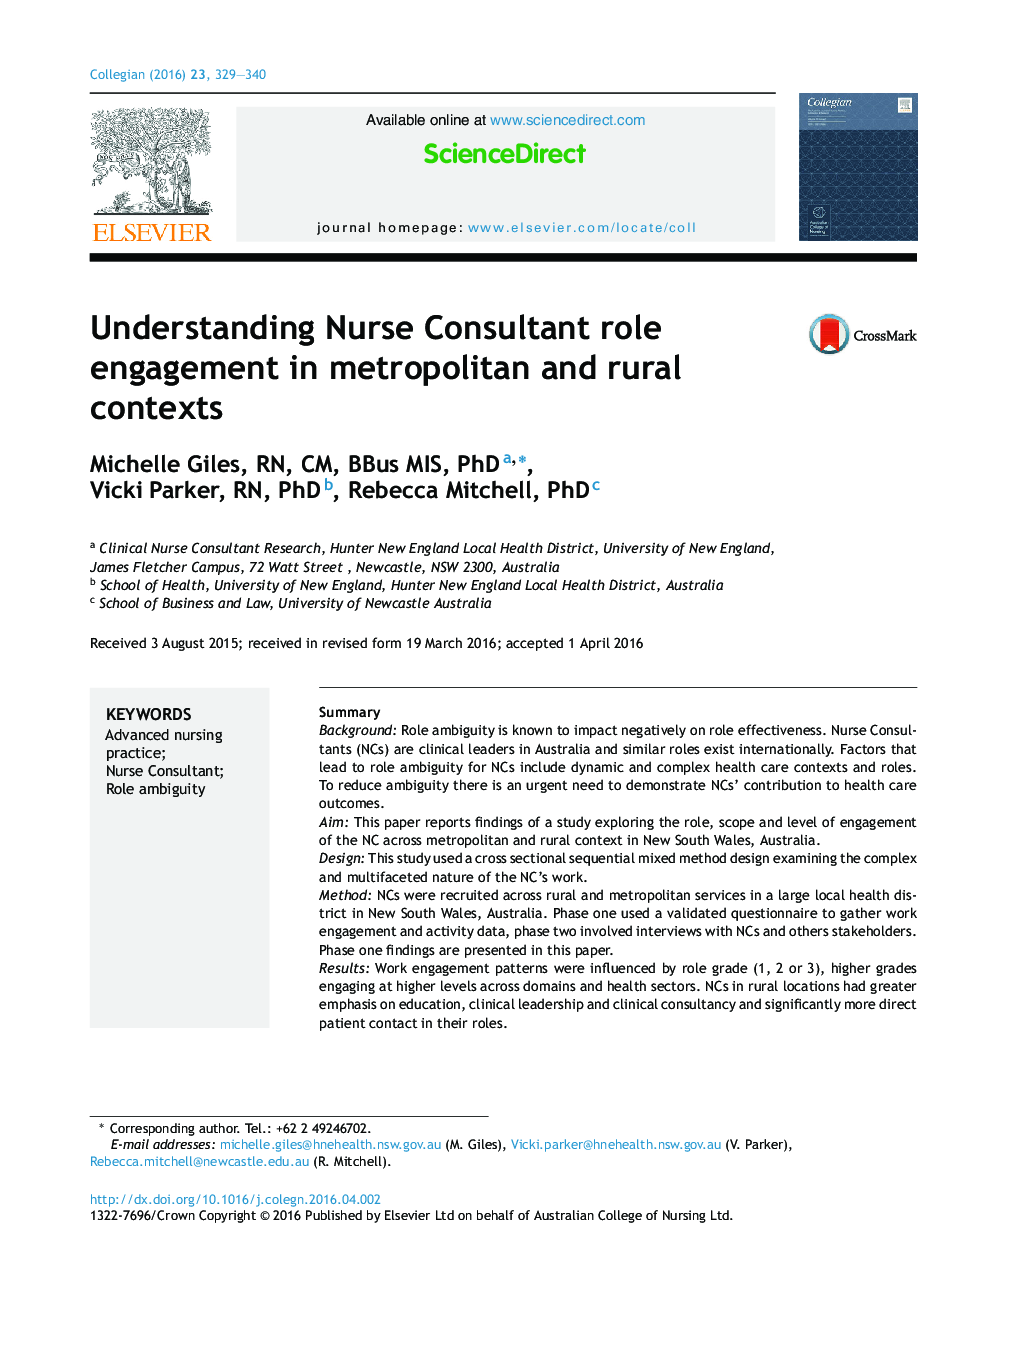 Understanding Nurse Consultant role engagement in metropolitan and rural contexts